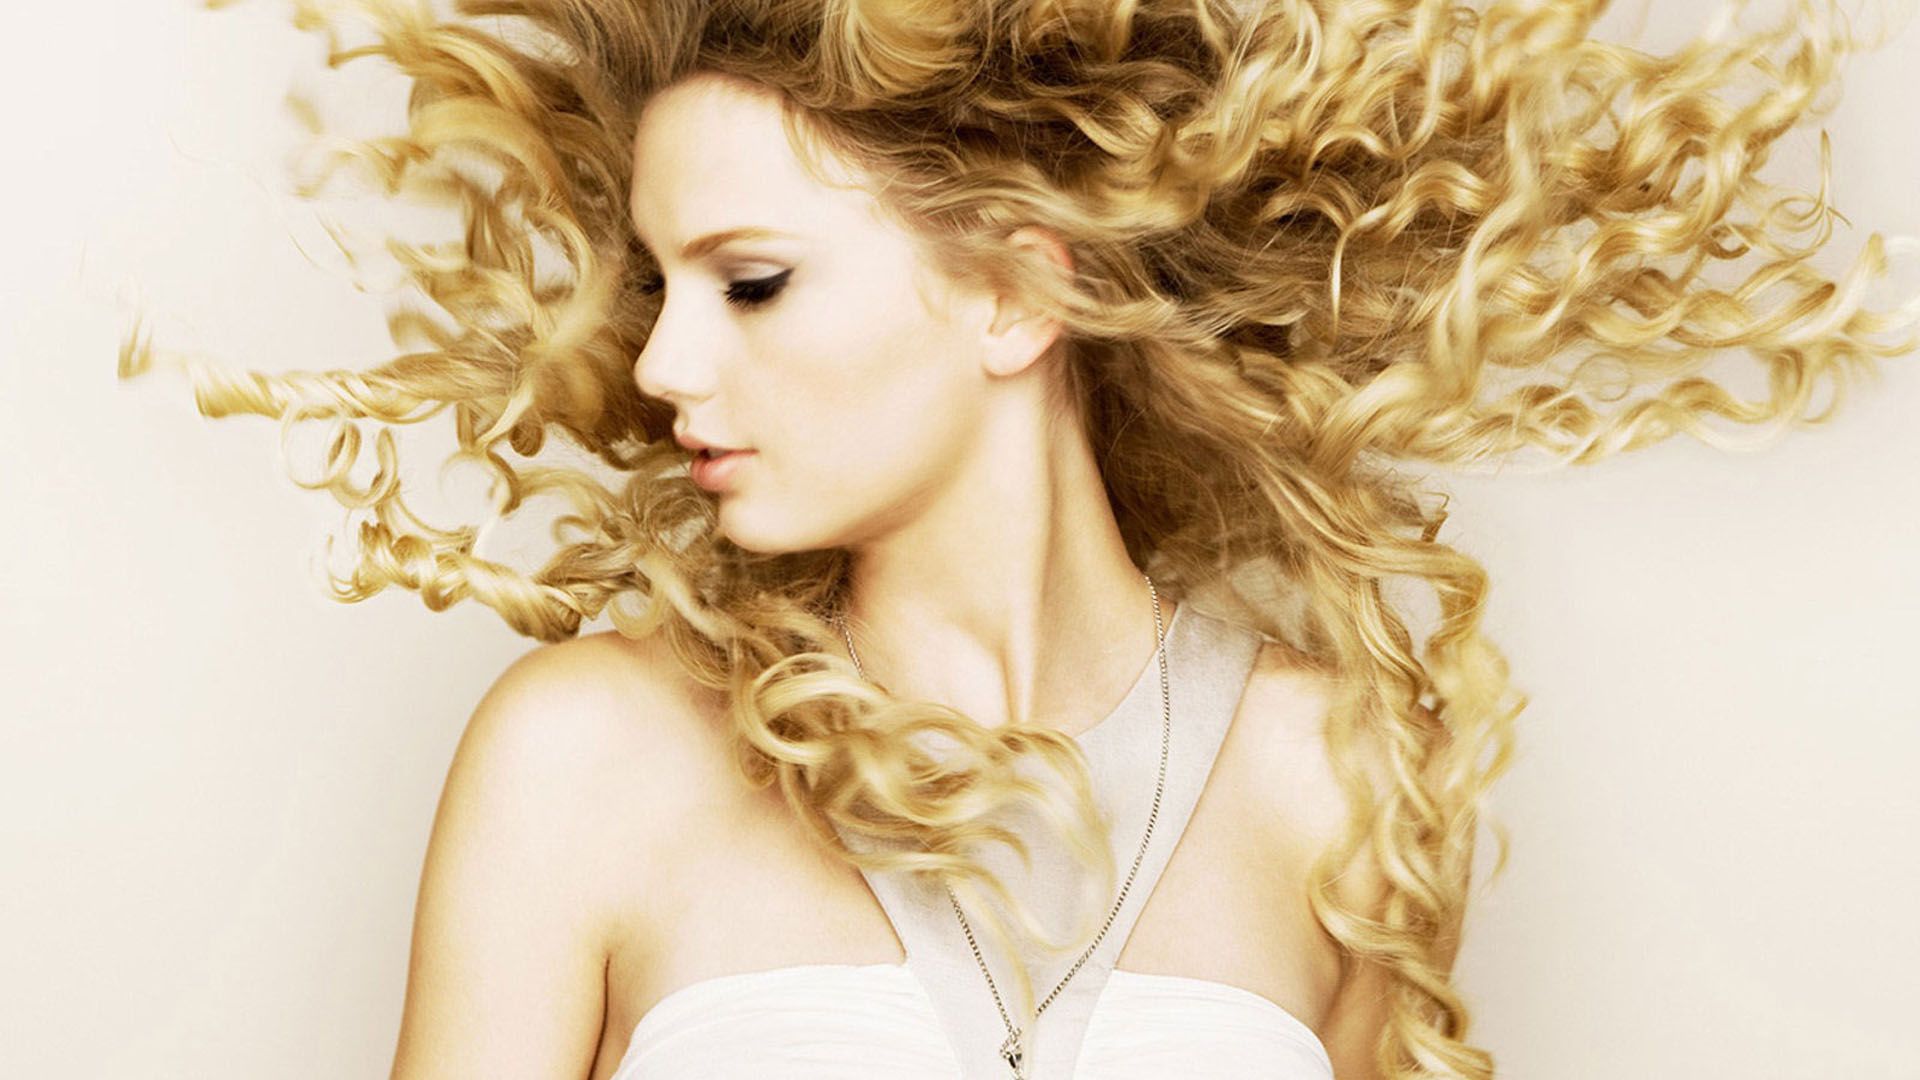 Taylor Swift Albums Desktop Wallpapers - Wallpaper Cave